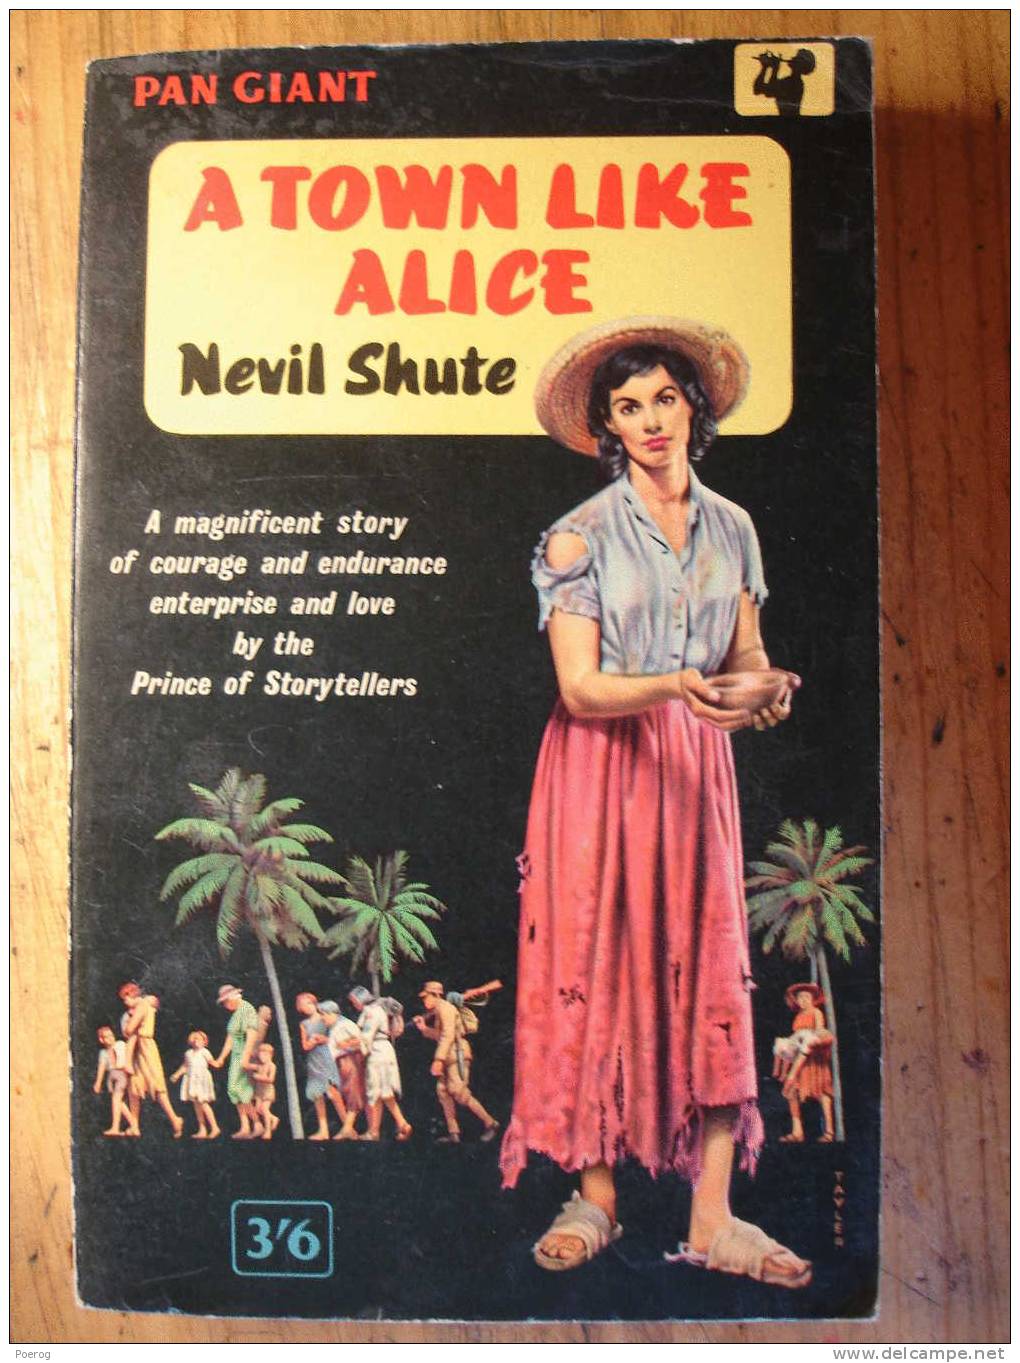 A TOWN LIKE ALICE - NEVIL SHUTE - PAN GIANT - LIVRE EN ANGLAIS Format Poche - 1961 - Literary Fiction